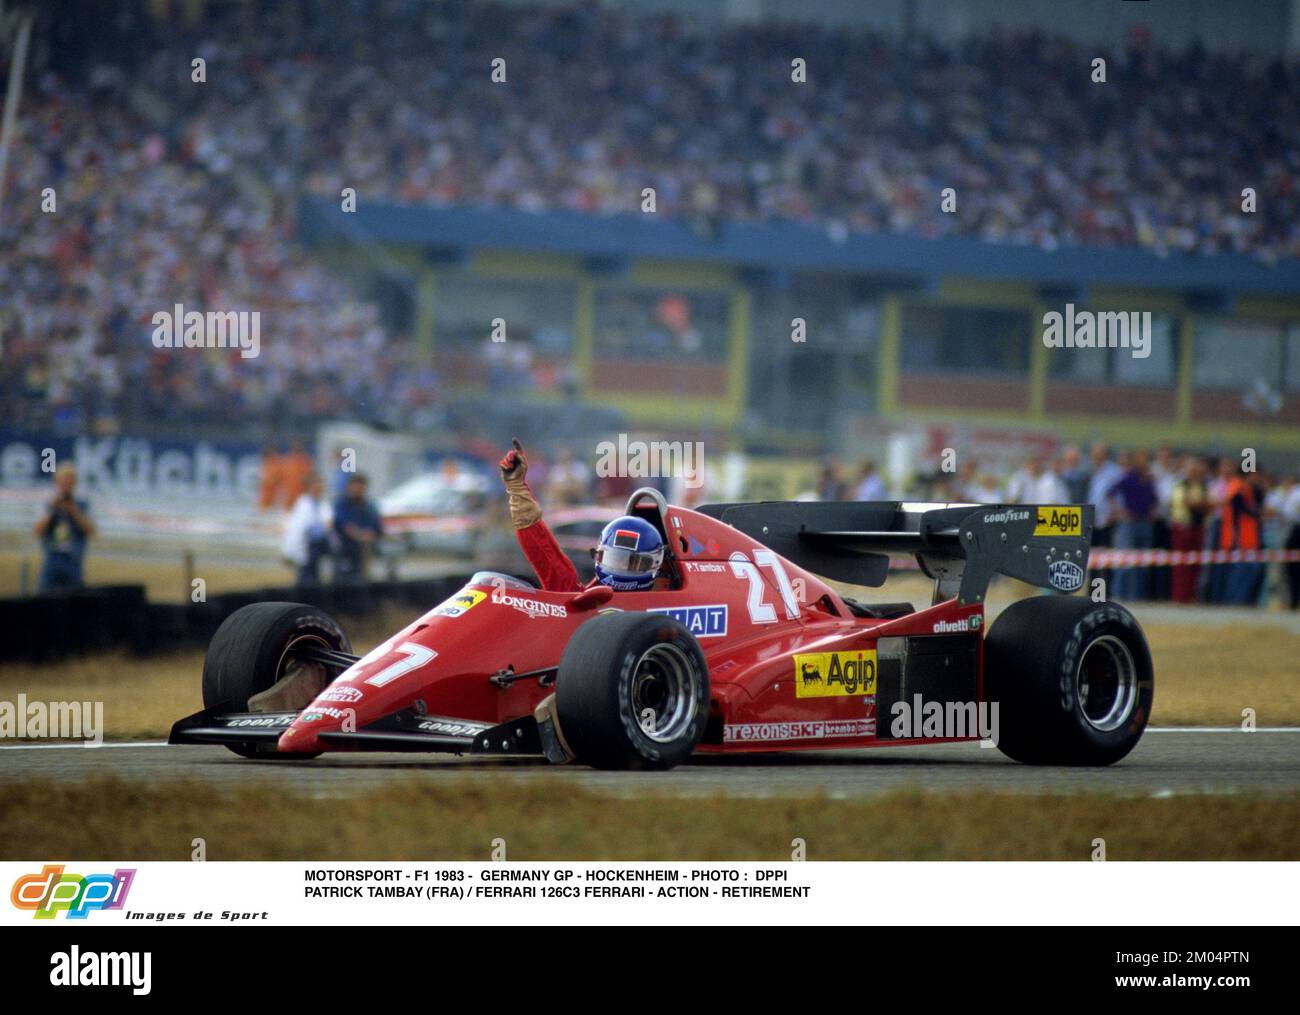 MOTORSPORT - F1 1983 - ALLEMAGNE GP - HOCKENHEIM - PHOTO : DPPI PATRICK TAMBAY (FRA) / FERRARI 126C3 FERRARI - ACTION - RETRAITE Banque D'Images